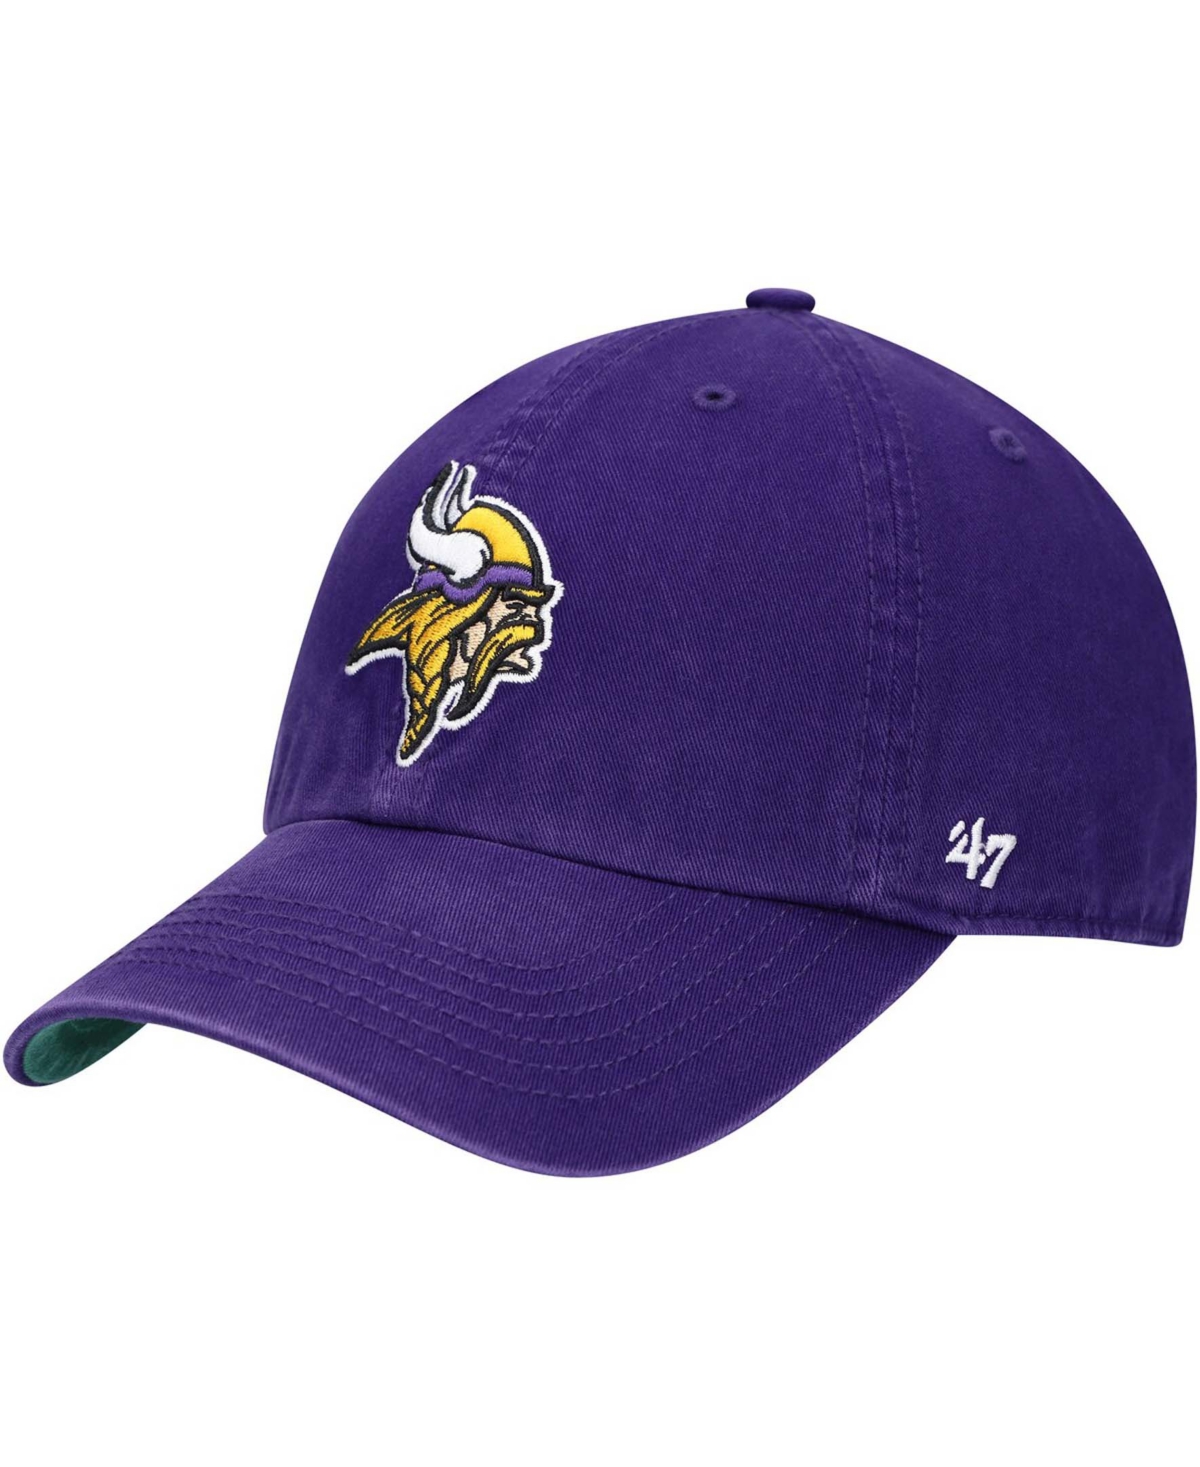 Men's Minnesota Vikings Franchise Logo Fitted Cap - Purple